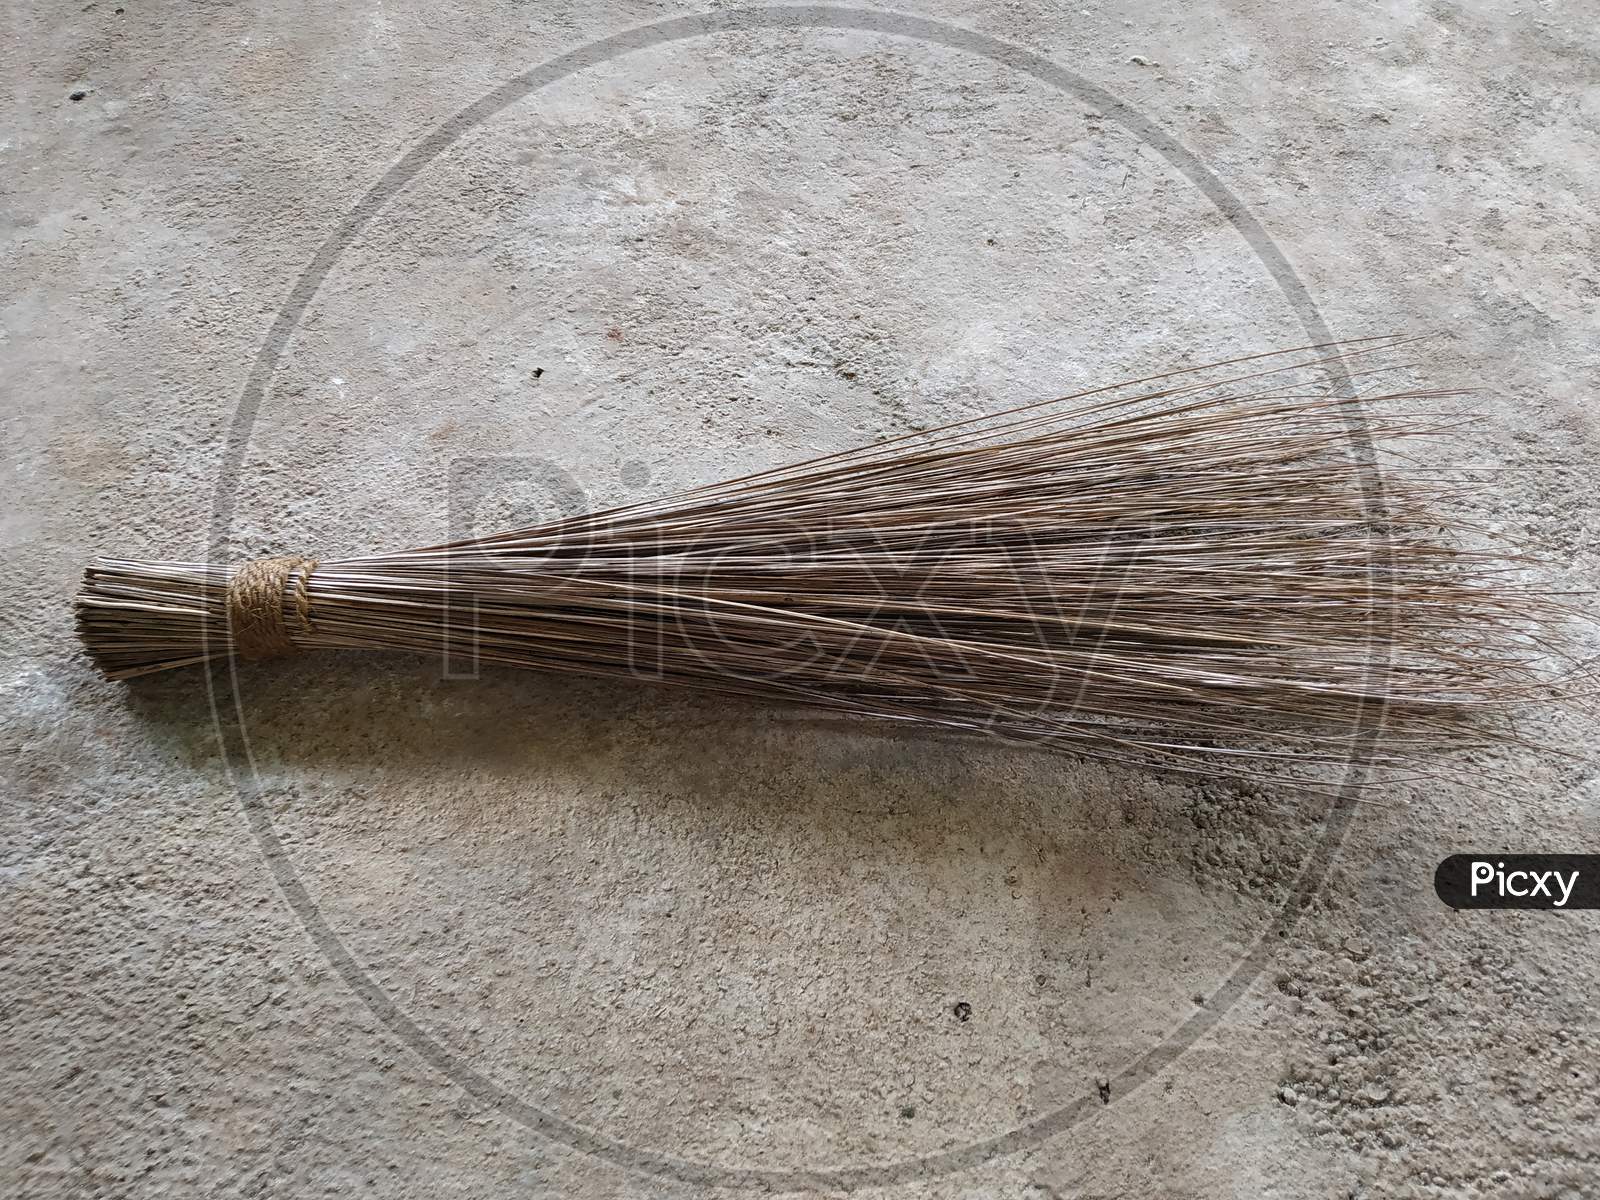 Coconut leaf stick broom for cleaning floors, Maharashtra, India